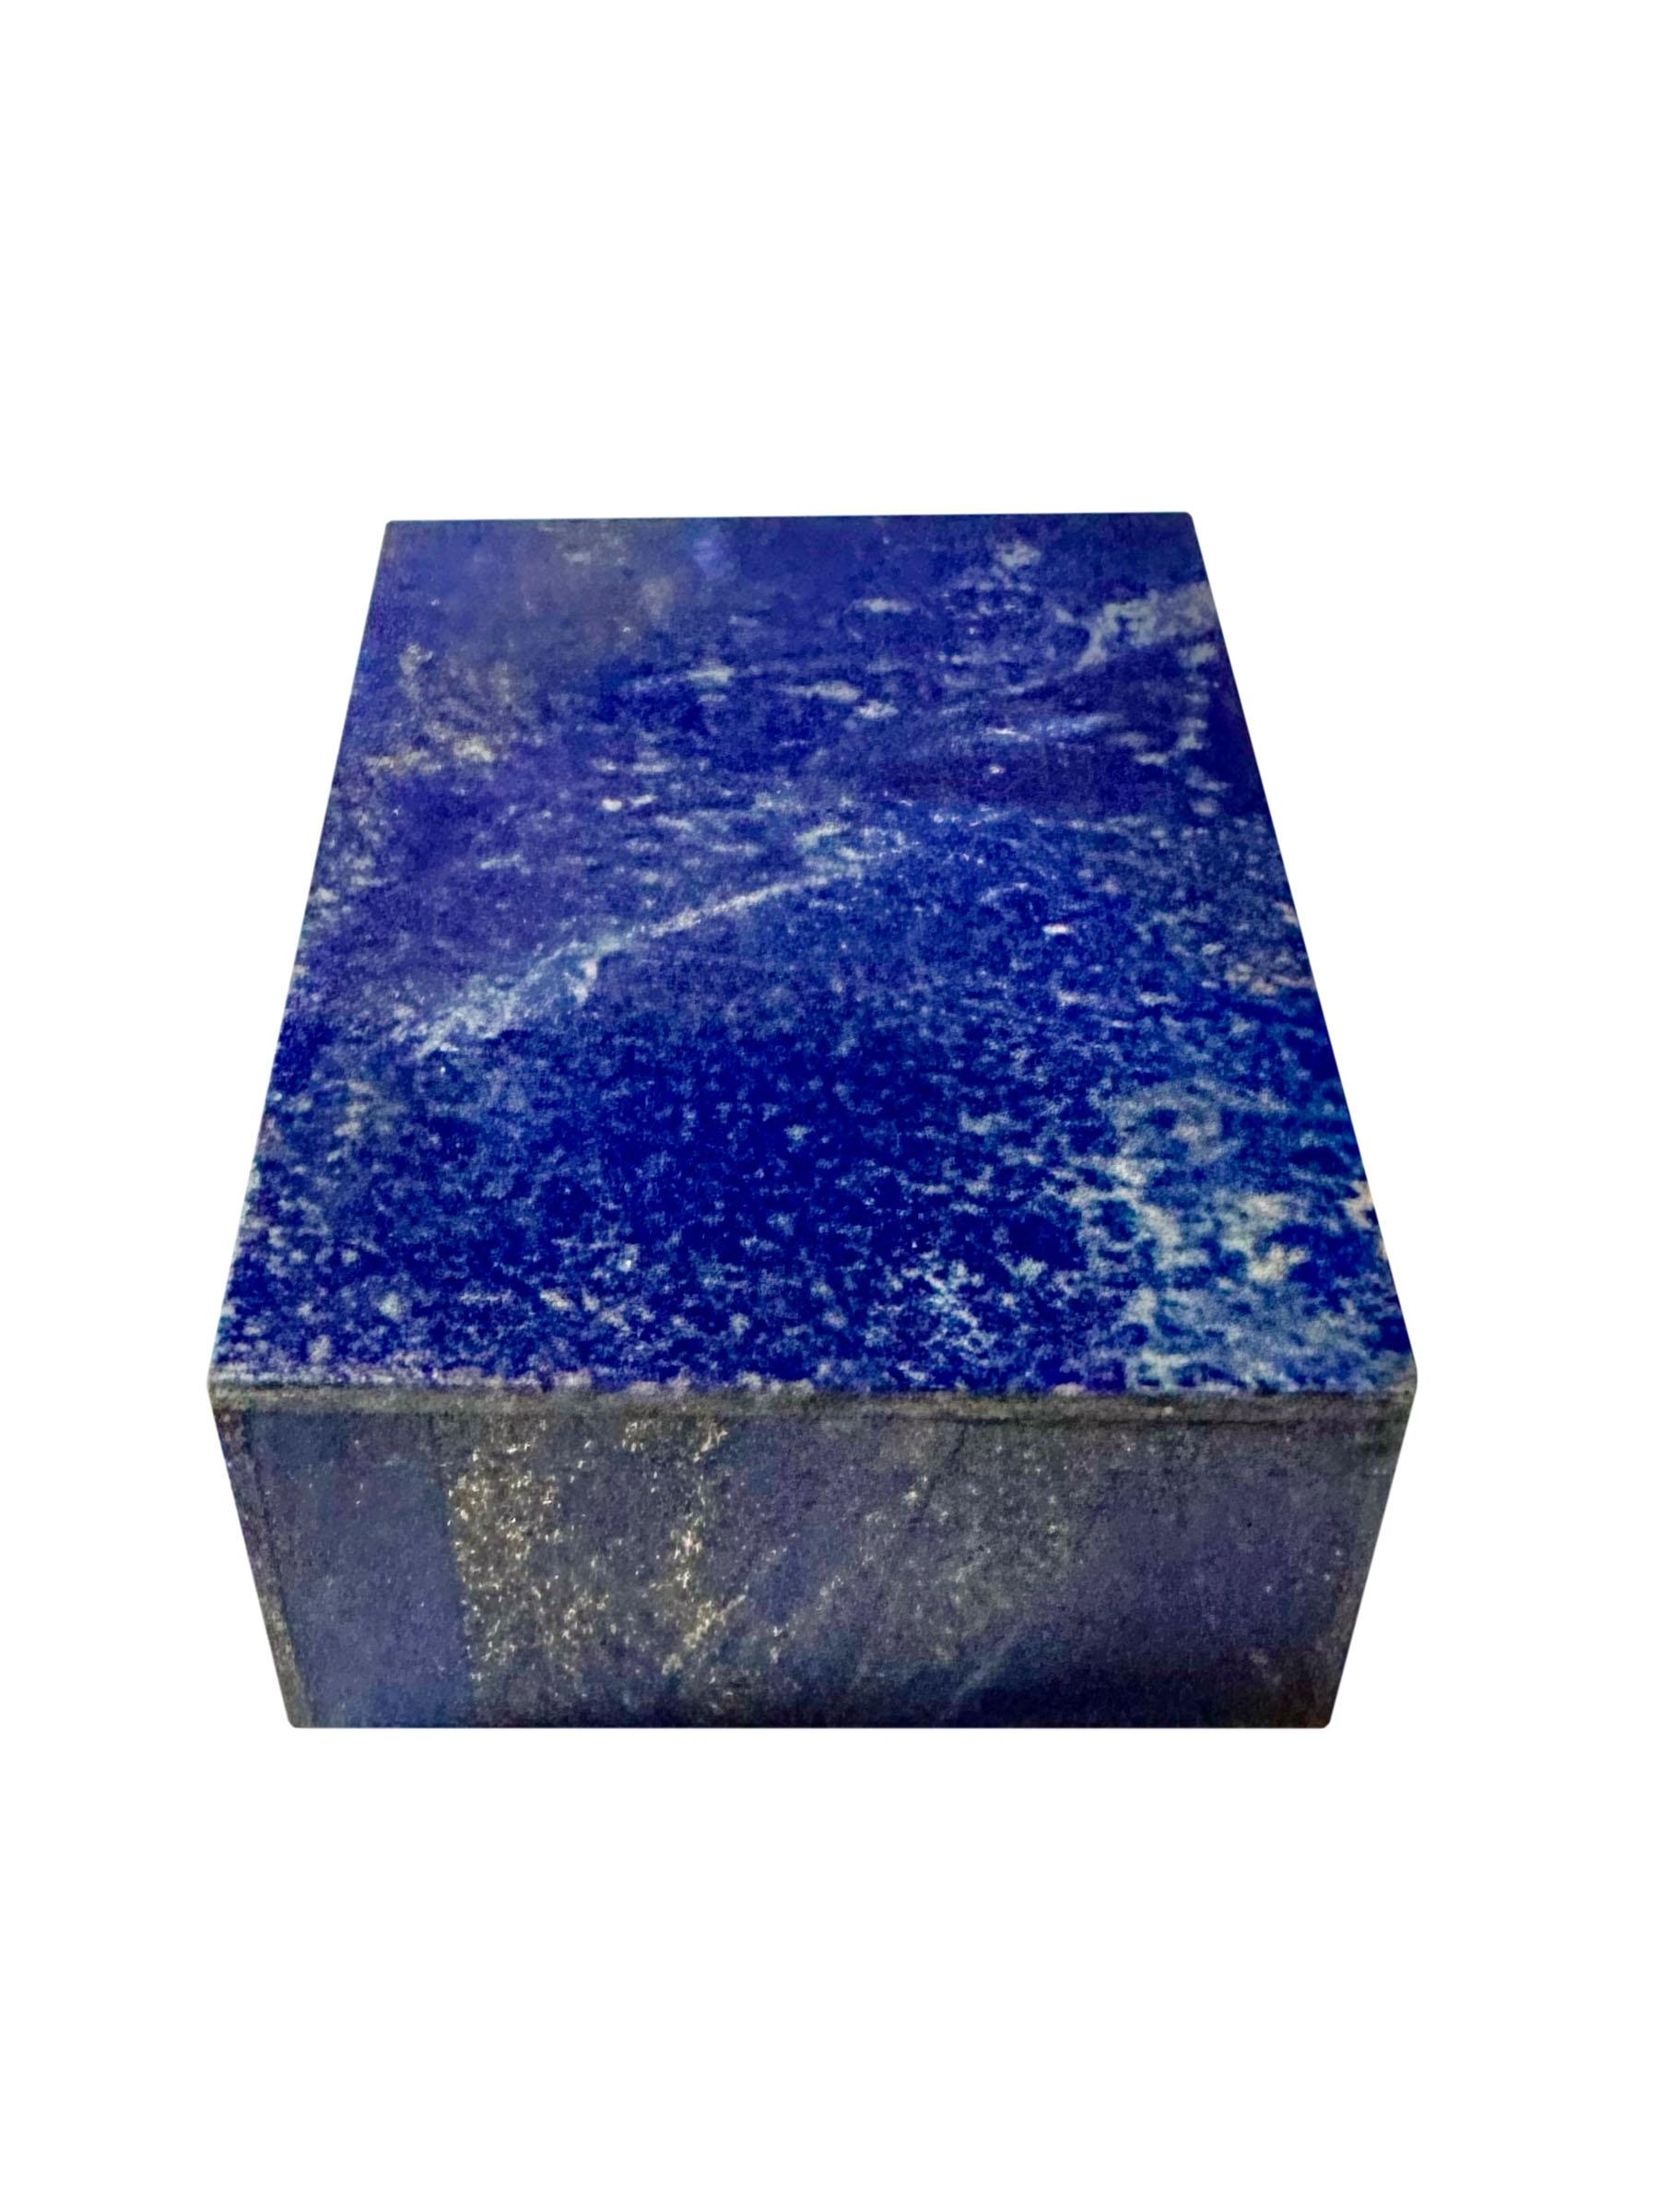 Lapis Lazuli Lapis with White Marble Box For Sale